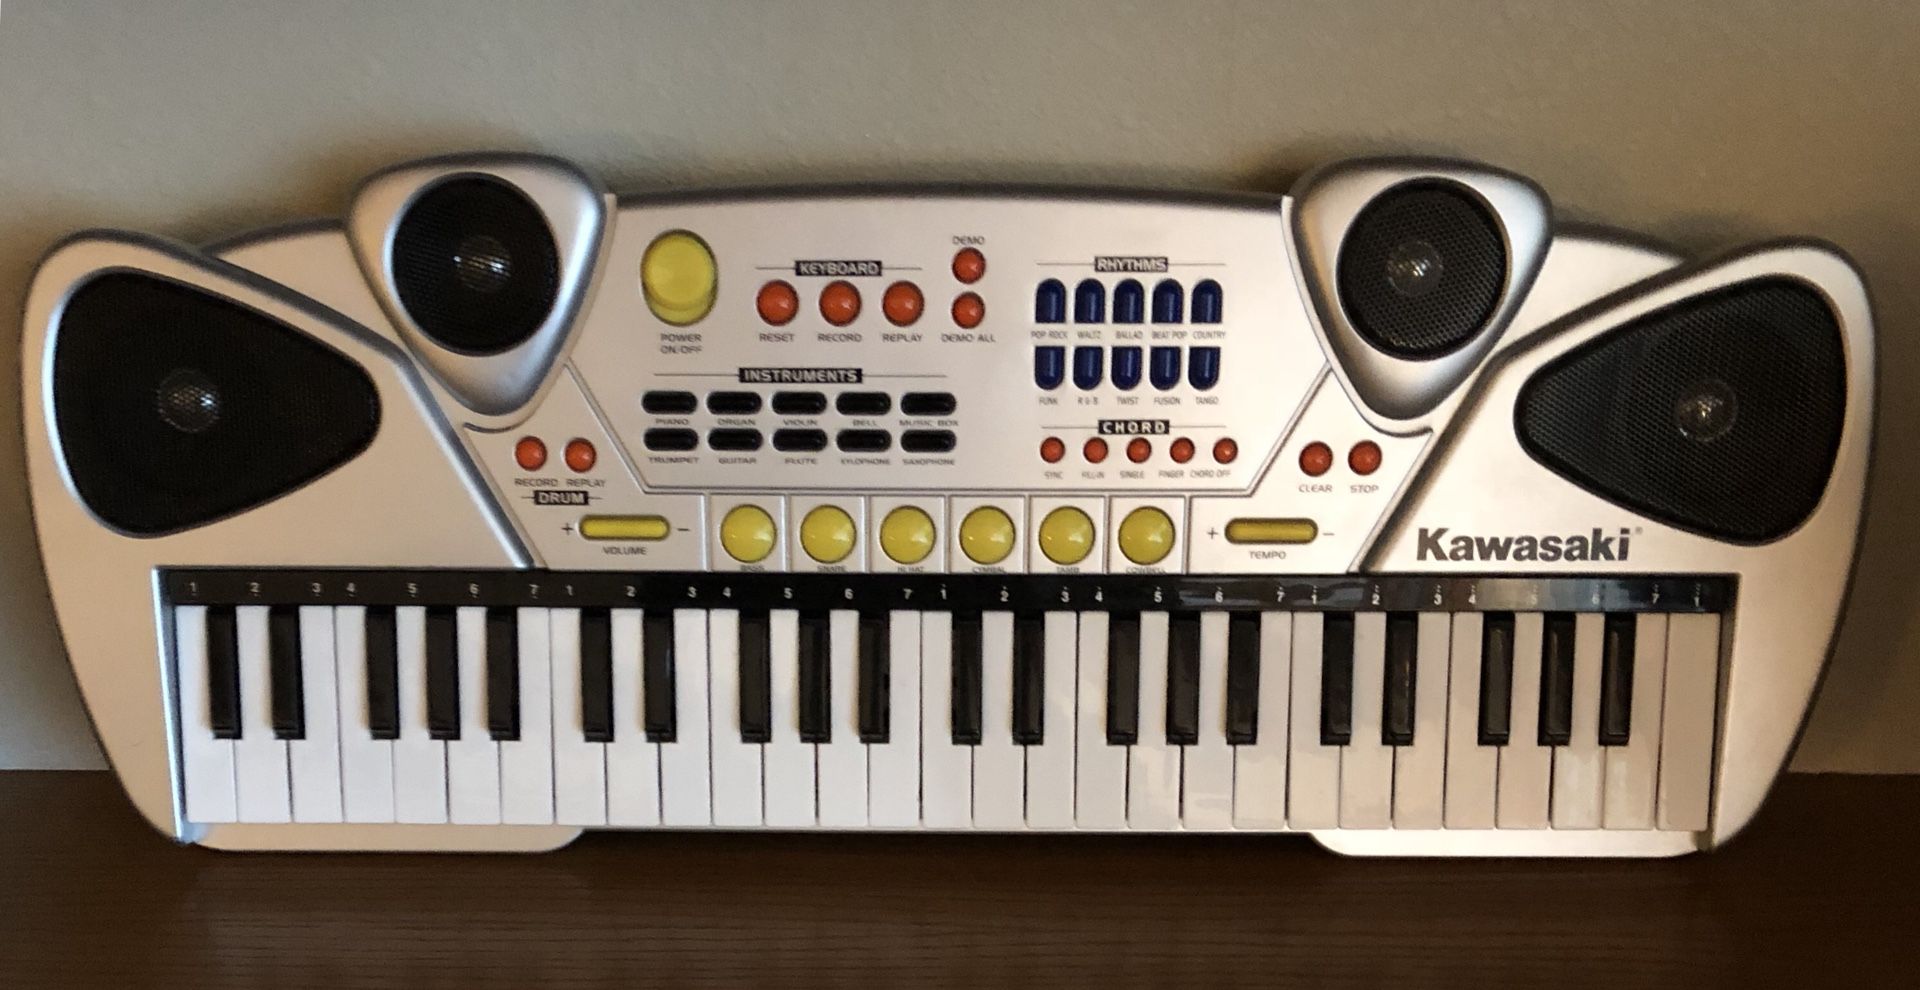 Kawasaki Electronic Music Musical Keyboard (Battery Powered)